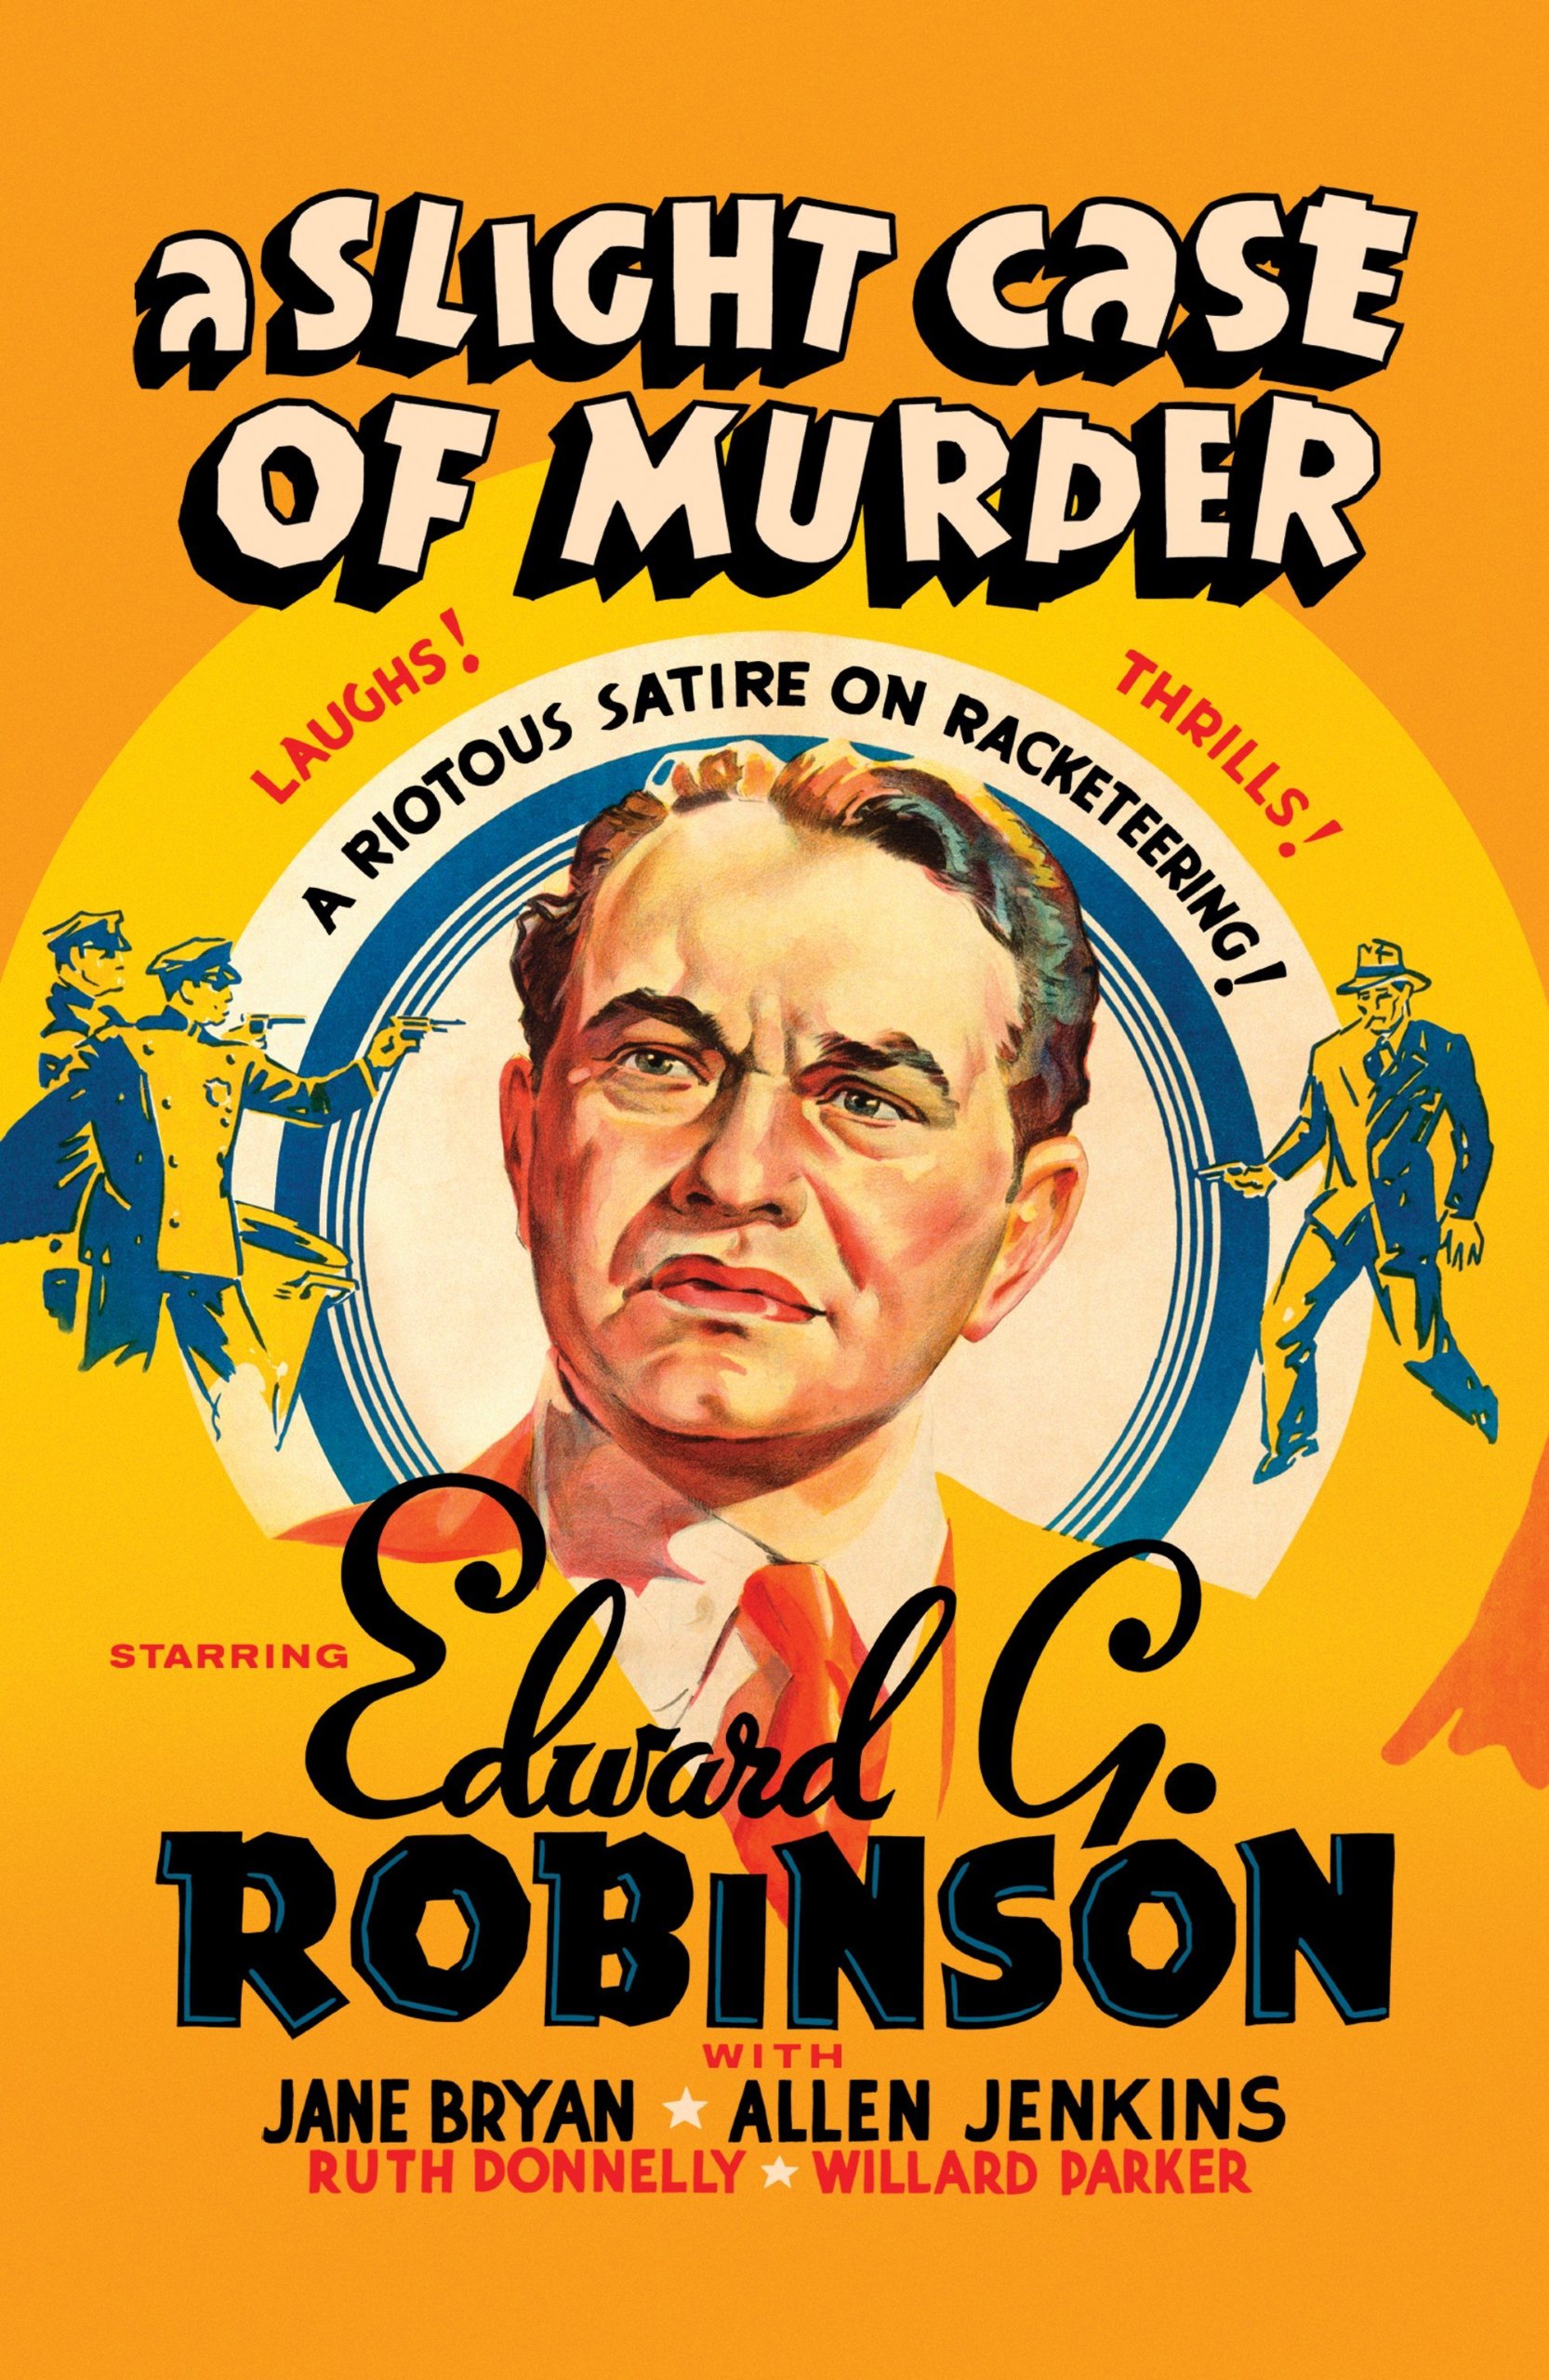 A Slight Case of Murder (1938) starring Edward G. Robinson, Jane Bryan, Edward Brophy, Ruth Donnelly, Bobby Jordan, Allen Jenkins